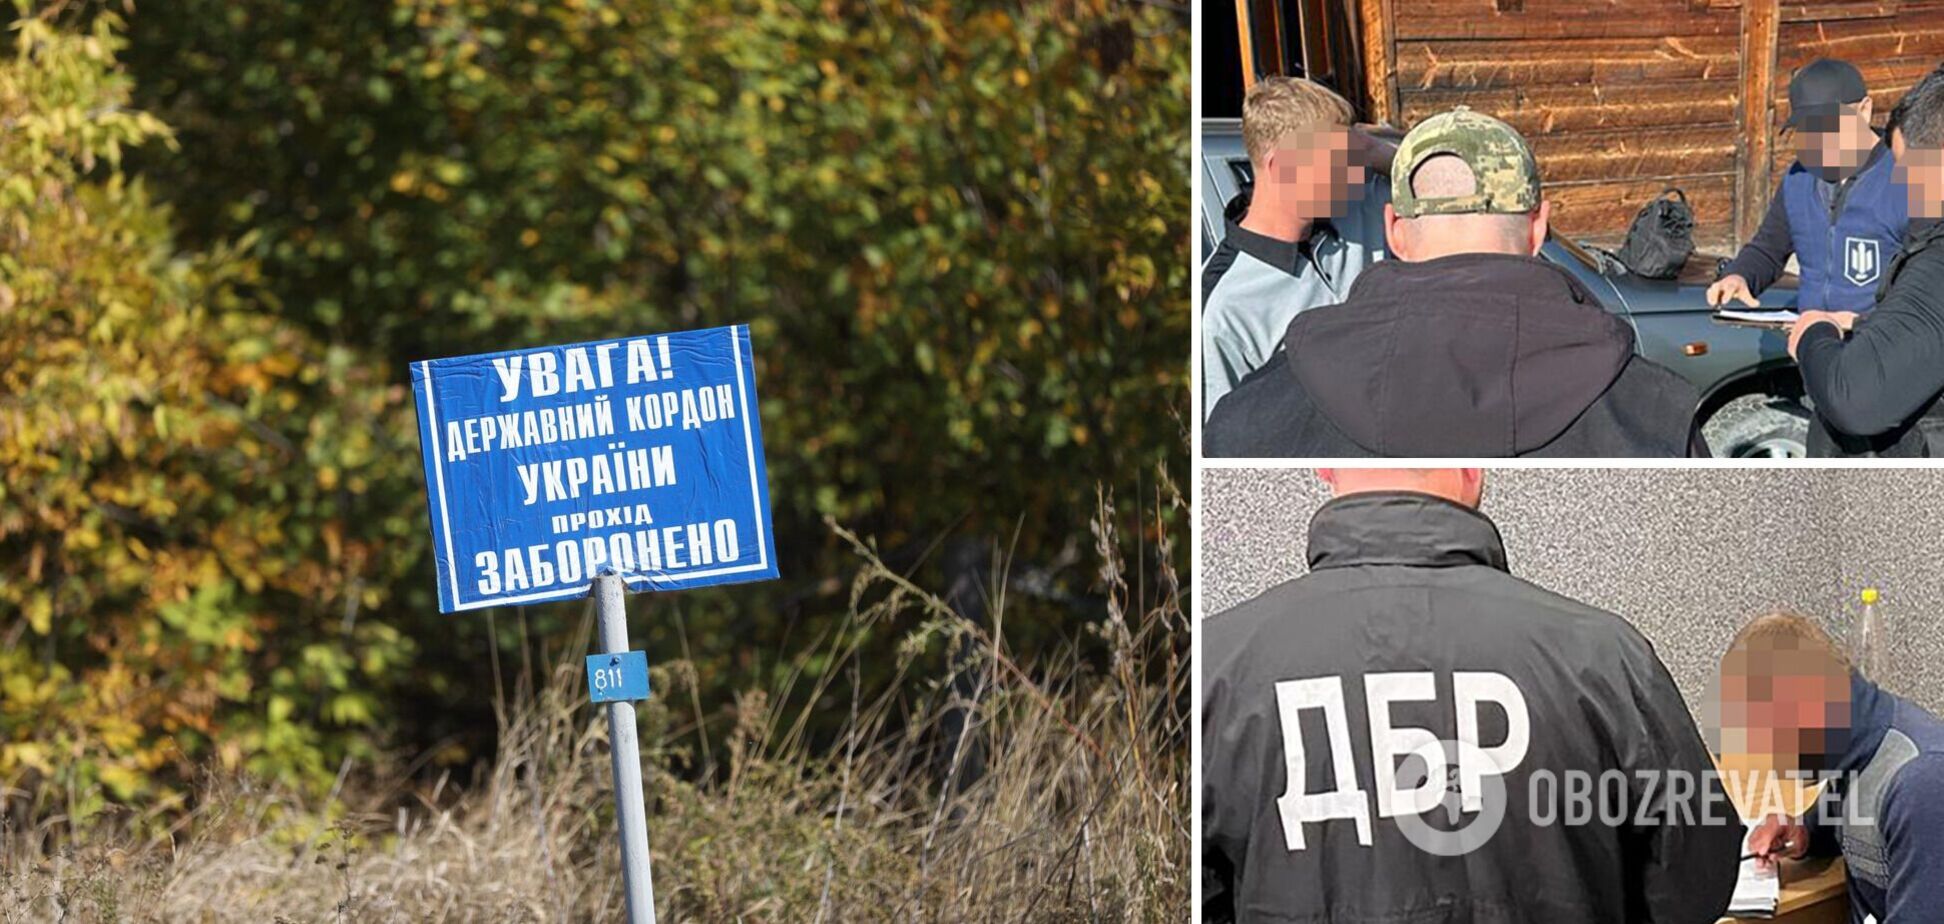 Помогал уклонистам незаконно пересекать границу: на Буковине разоблачили 'оборотня' в погонах. Фото